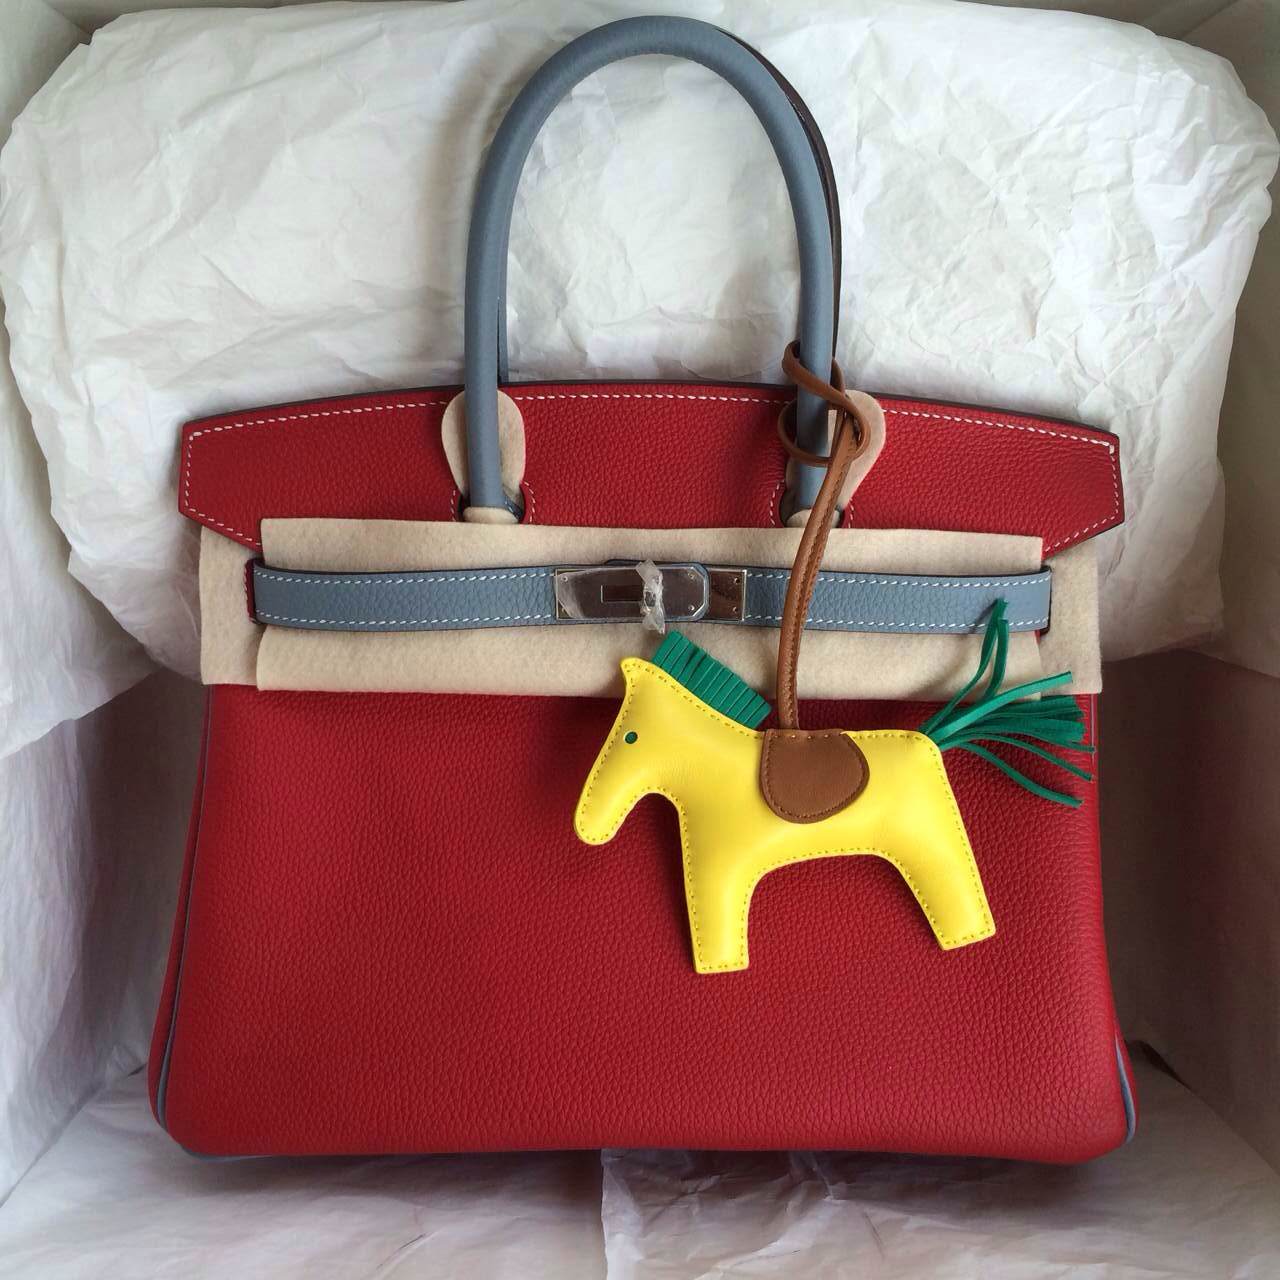 mini kelly hermes - Fashion Hermes Birkin Bag 30cm Q5 Candy Red/J7 Blue Lin France ...